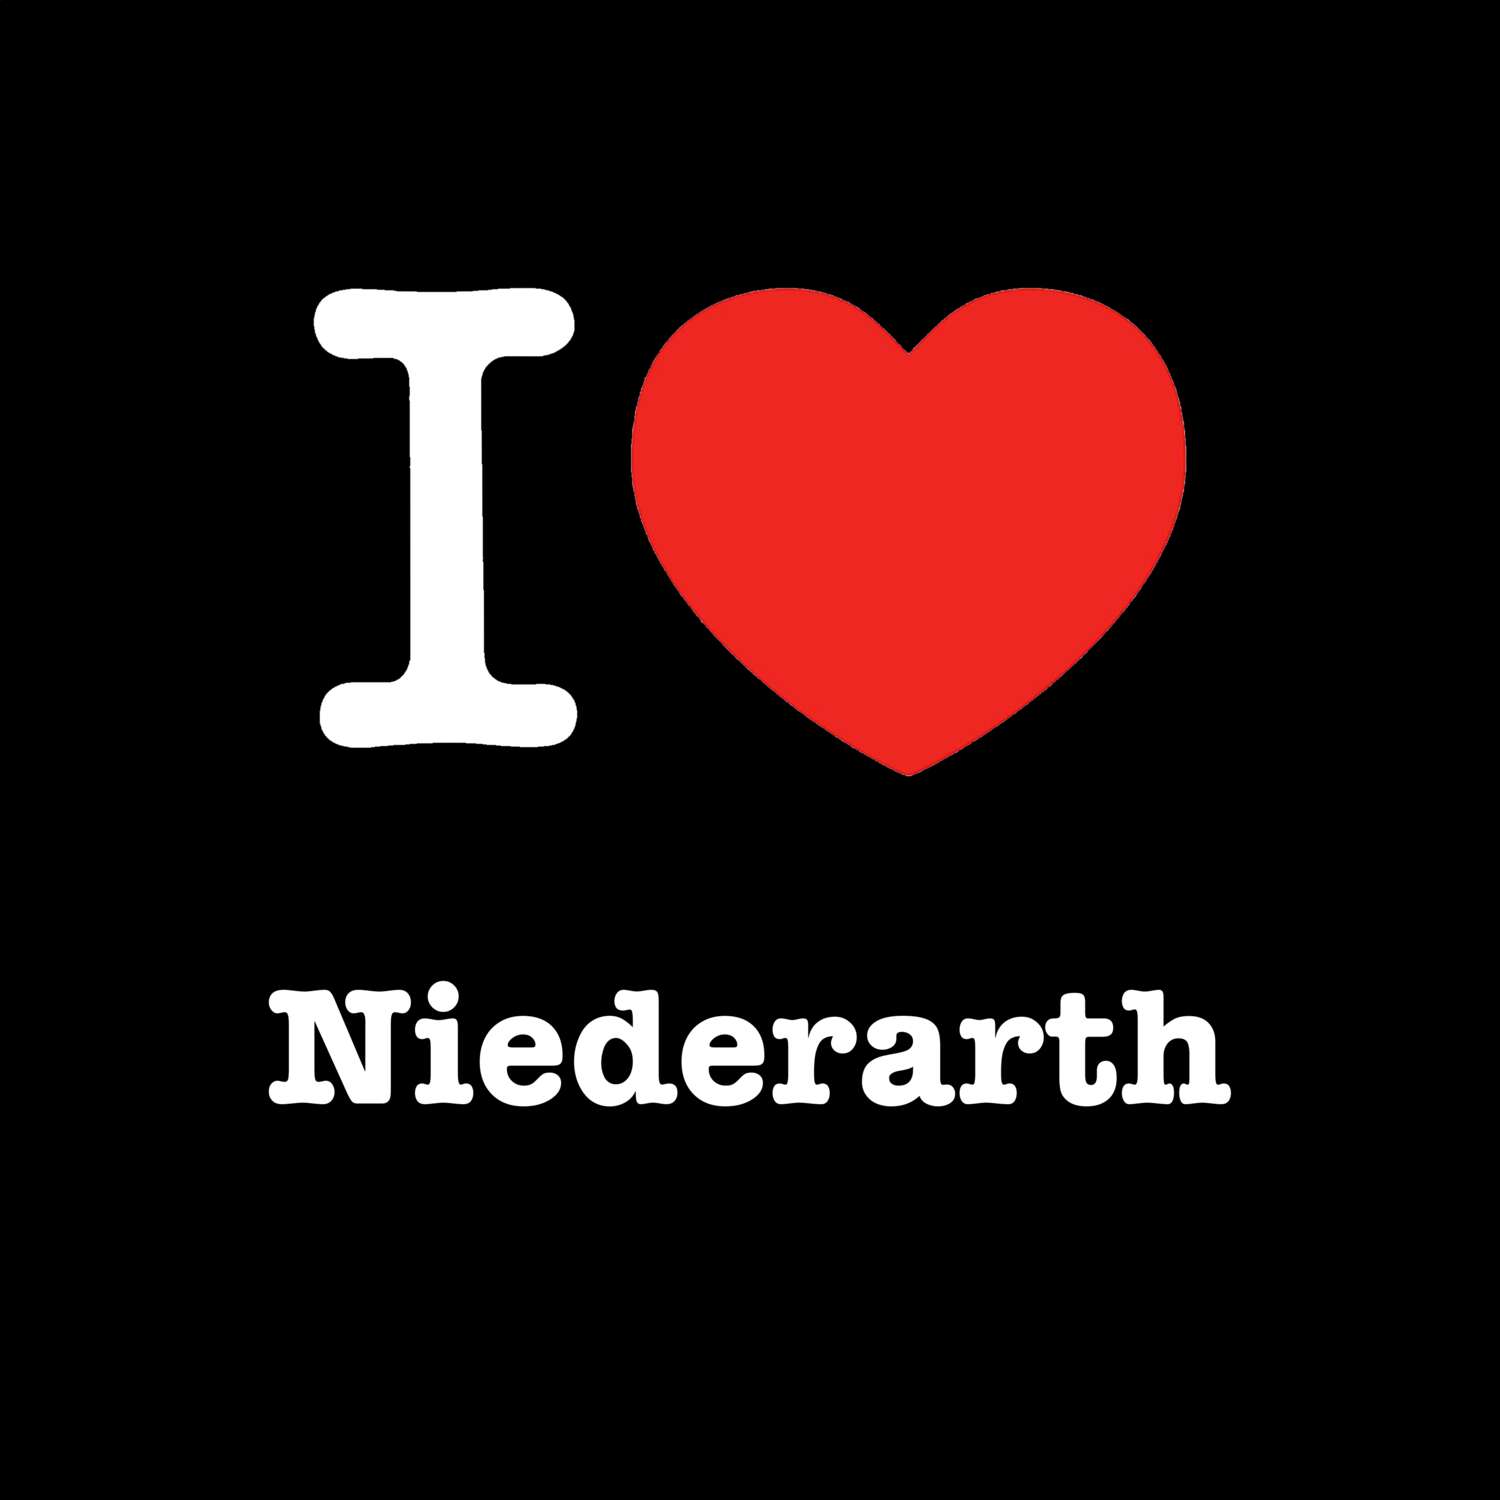 Niederarth T-Shirt »I love«